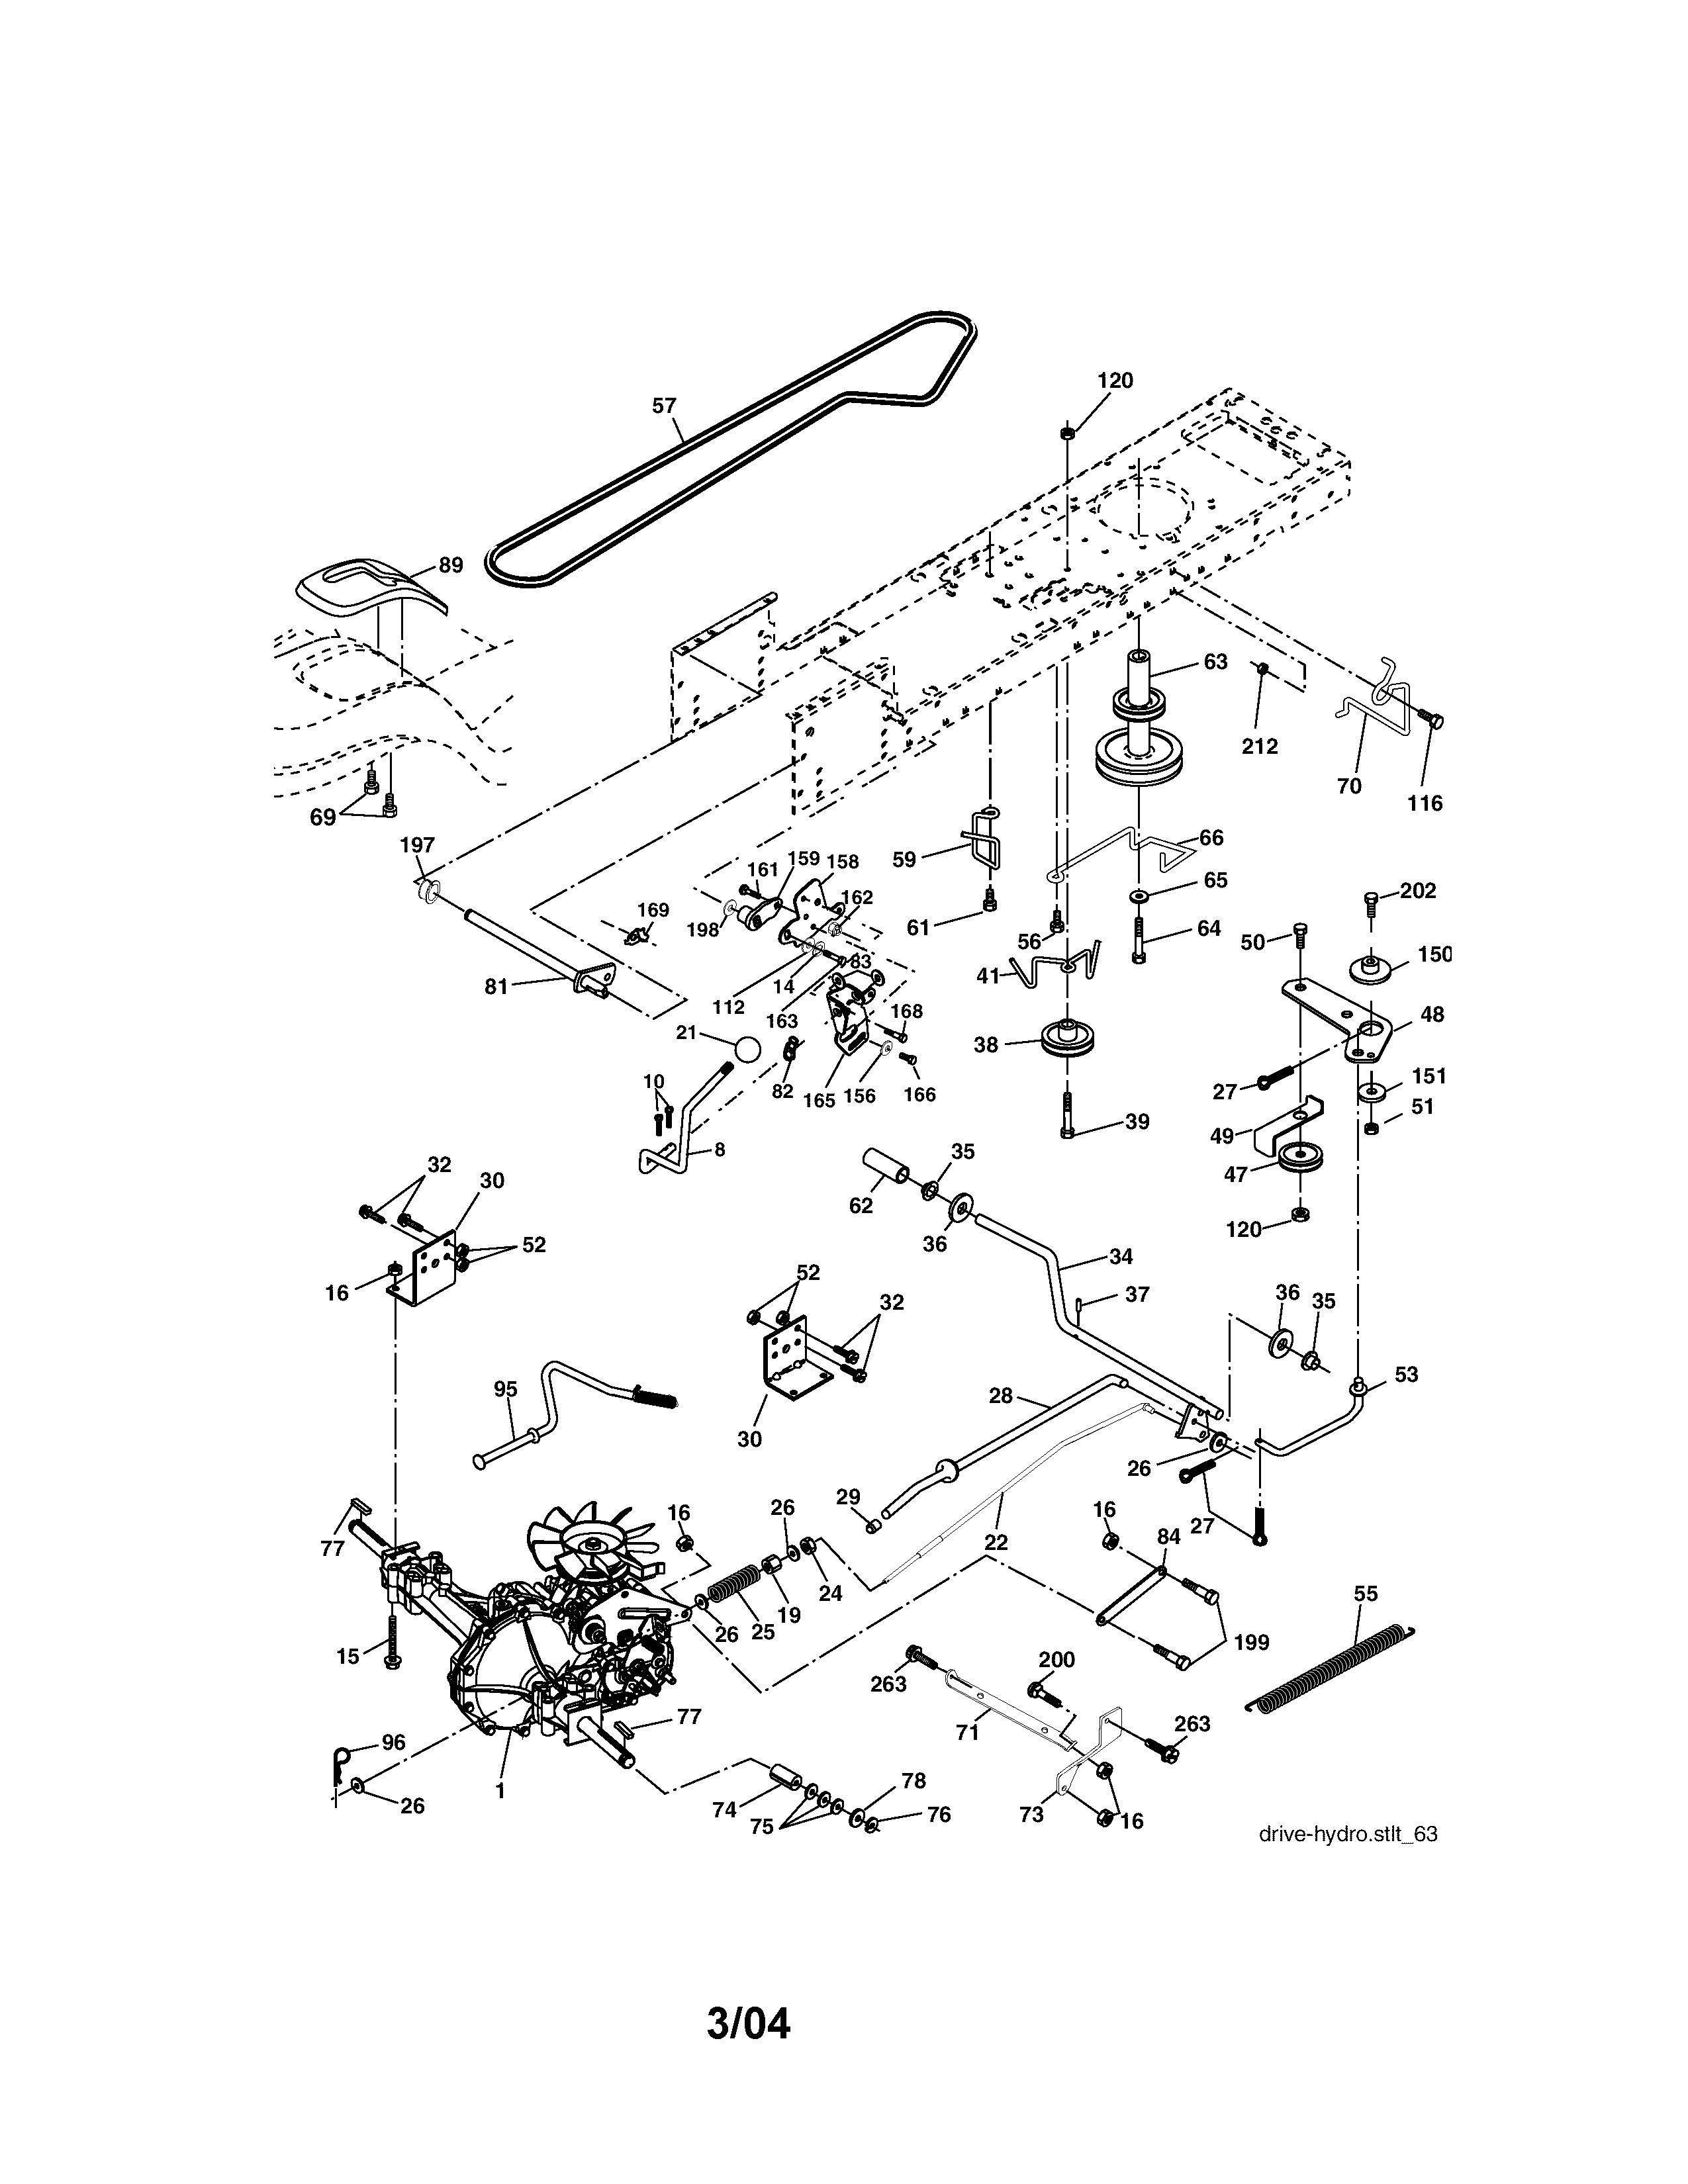 Craftsman Lt2000 Parts Diagram - Food Ideas